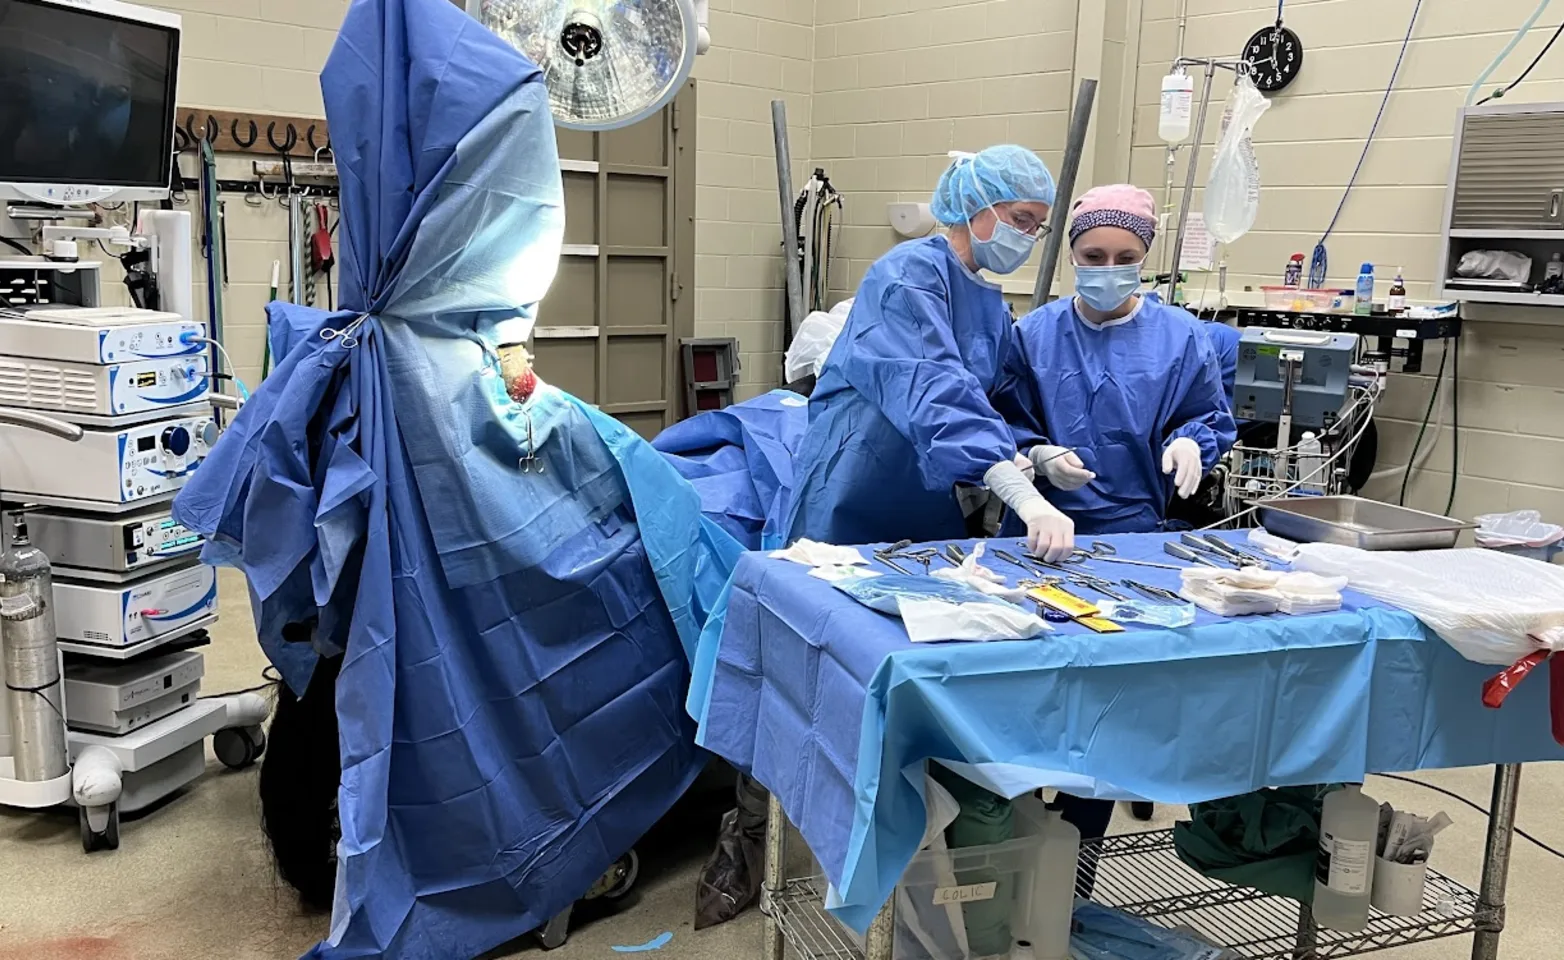 Staff choosing surgery euqipment